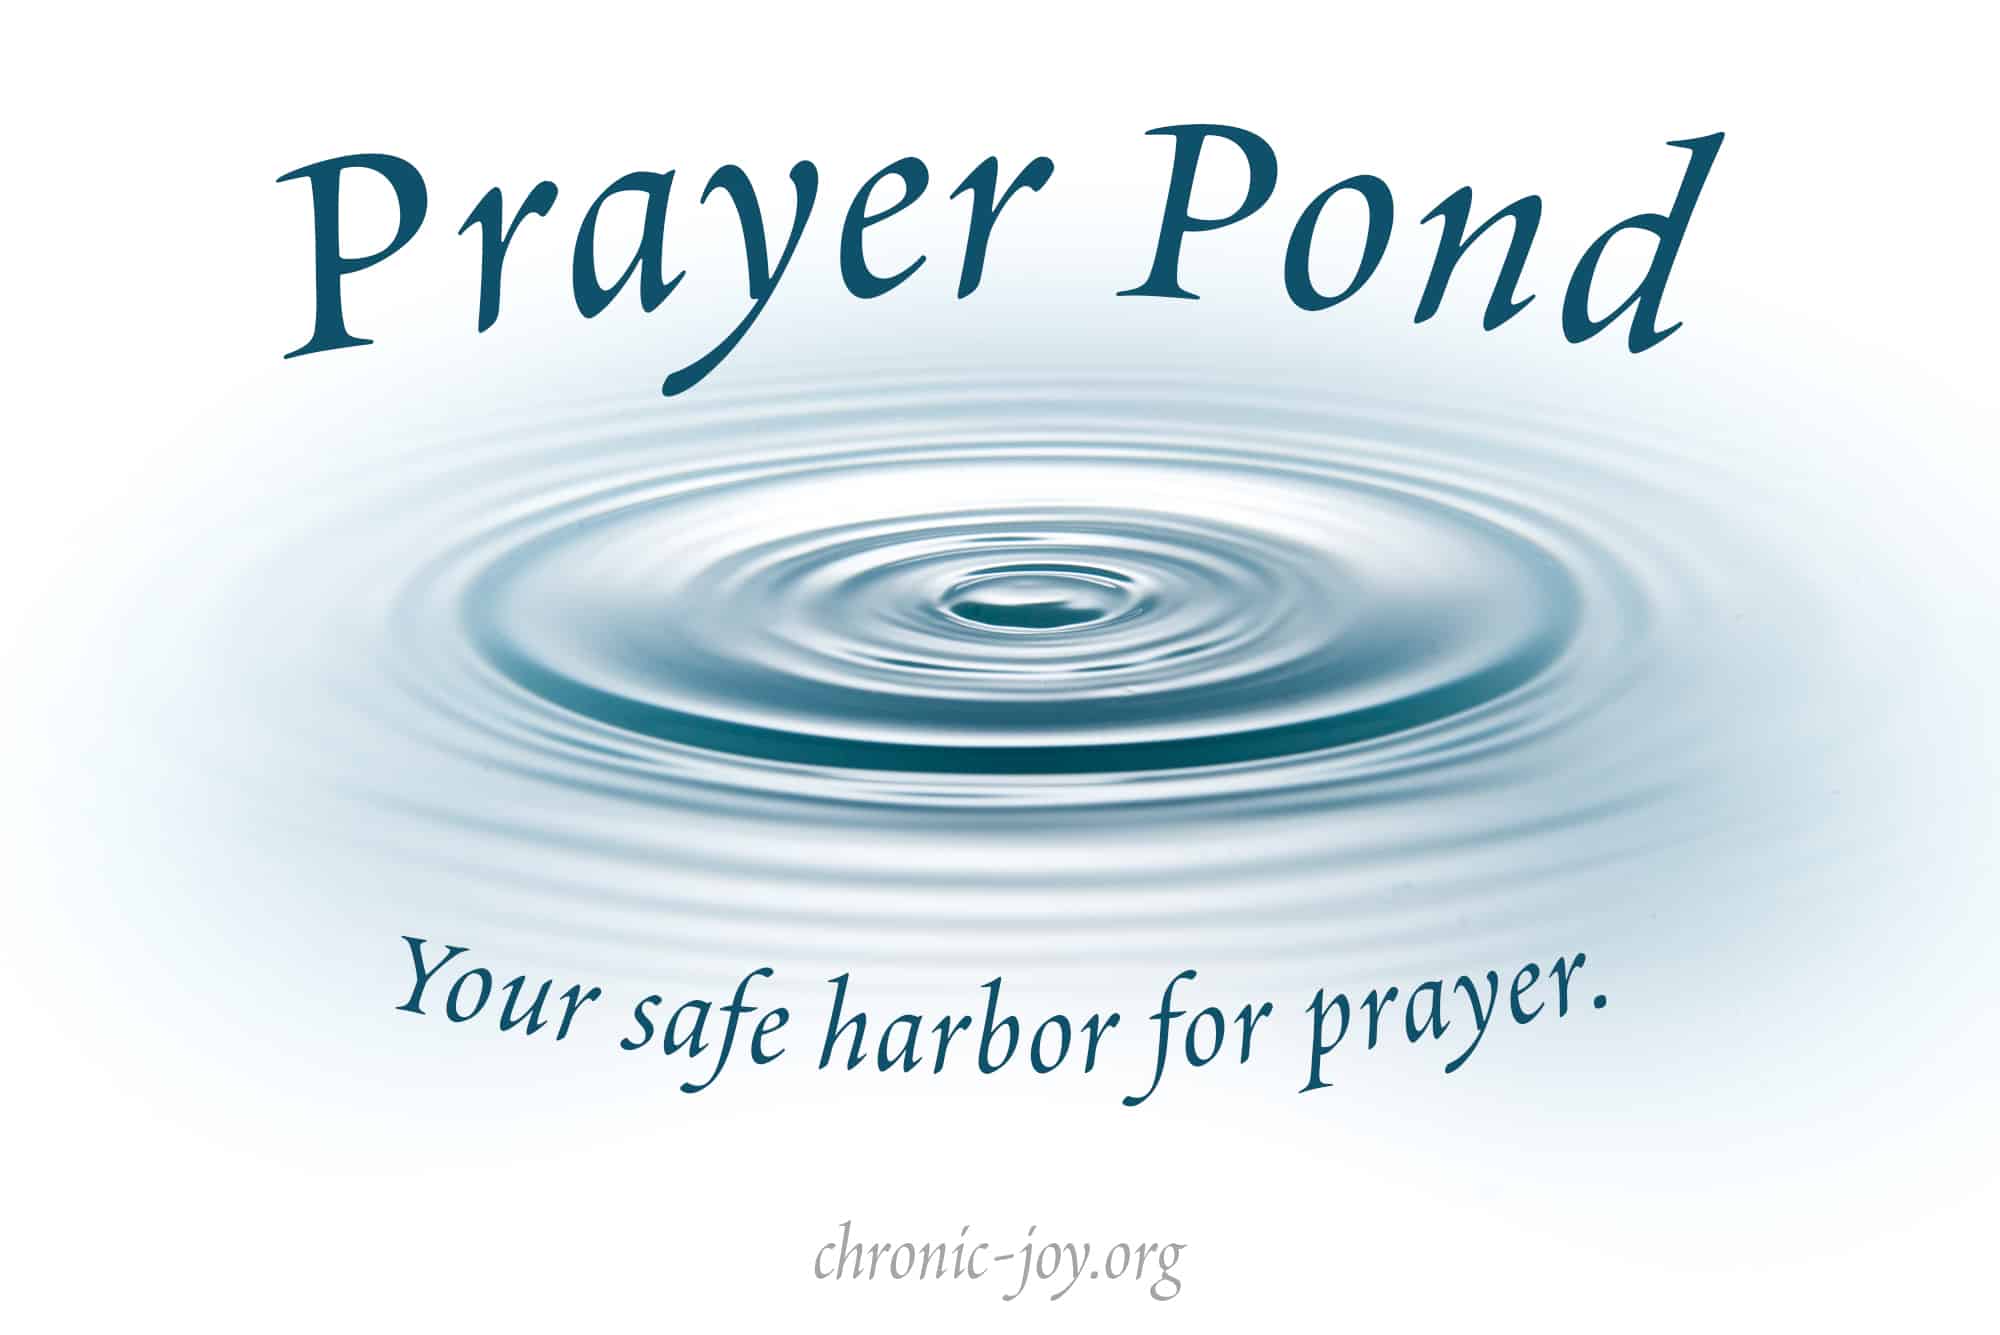 Prayer Pond • Your Safe Harbor for Prayer.